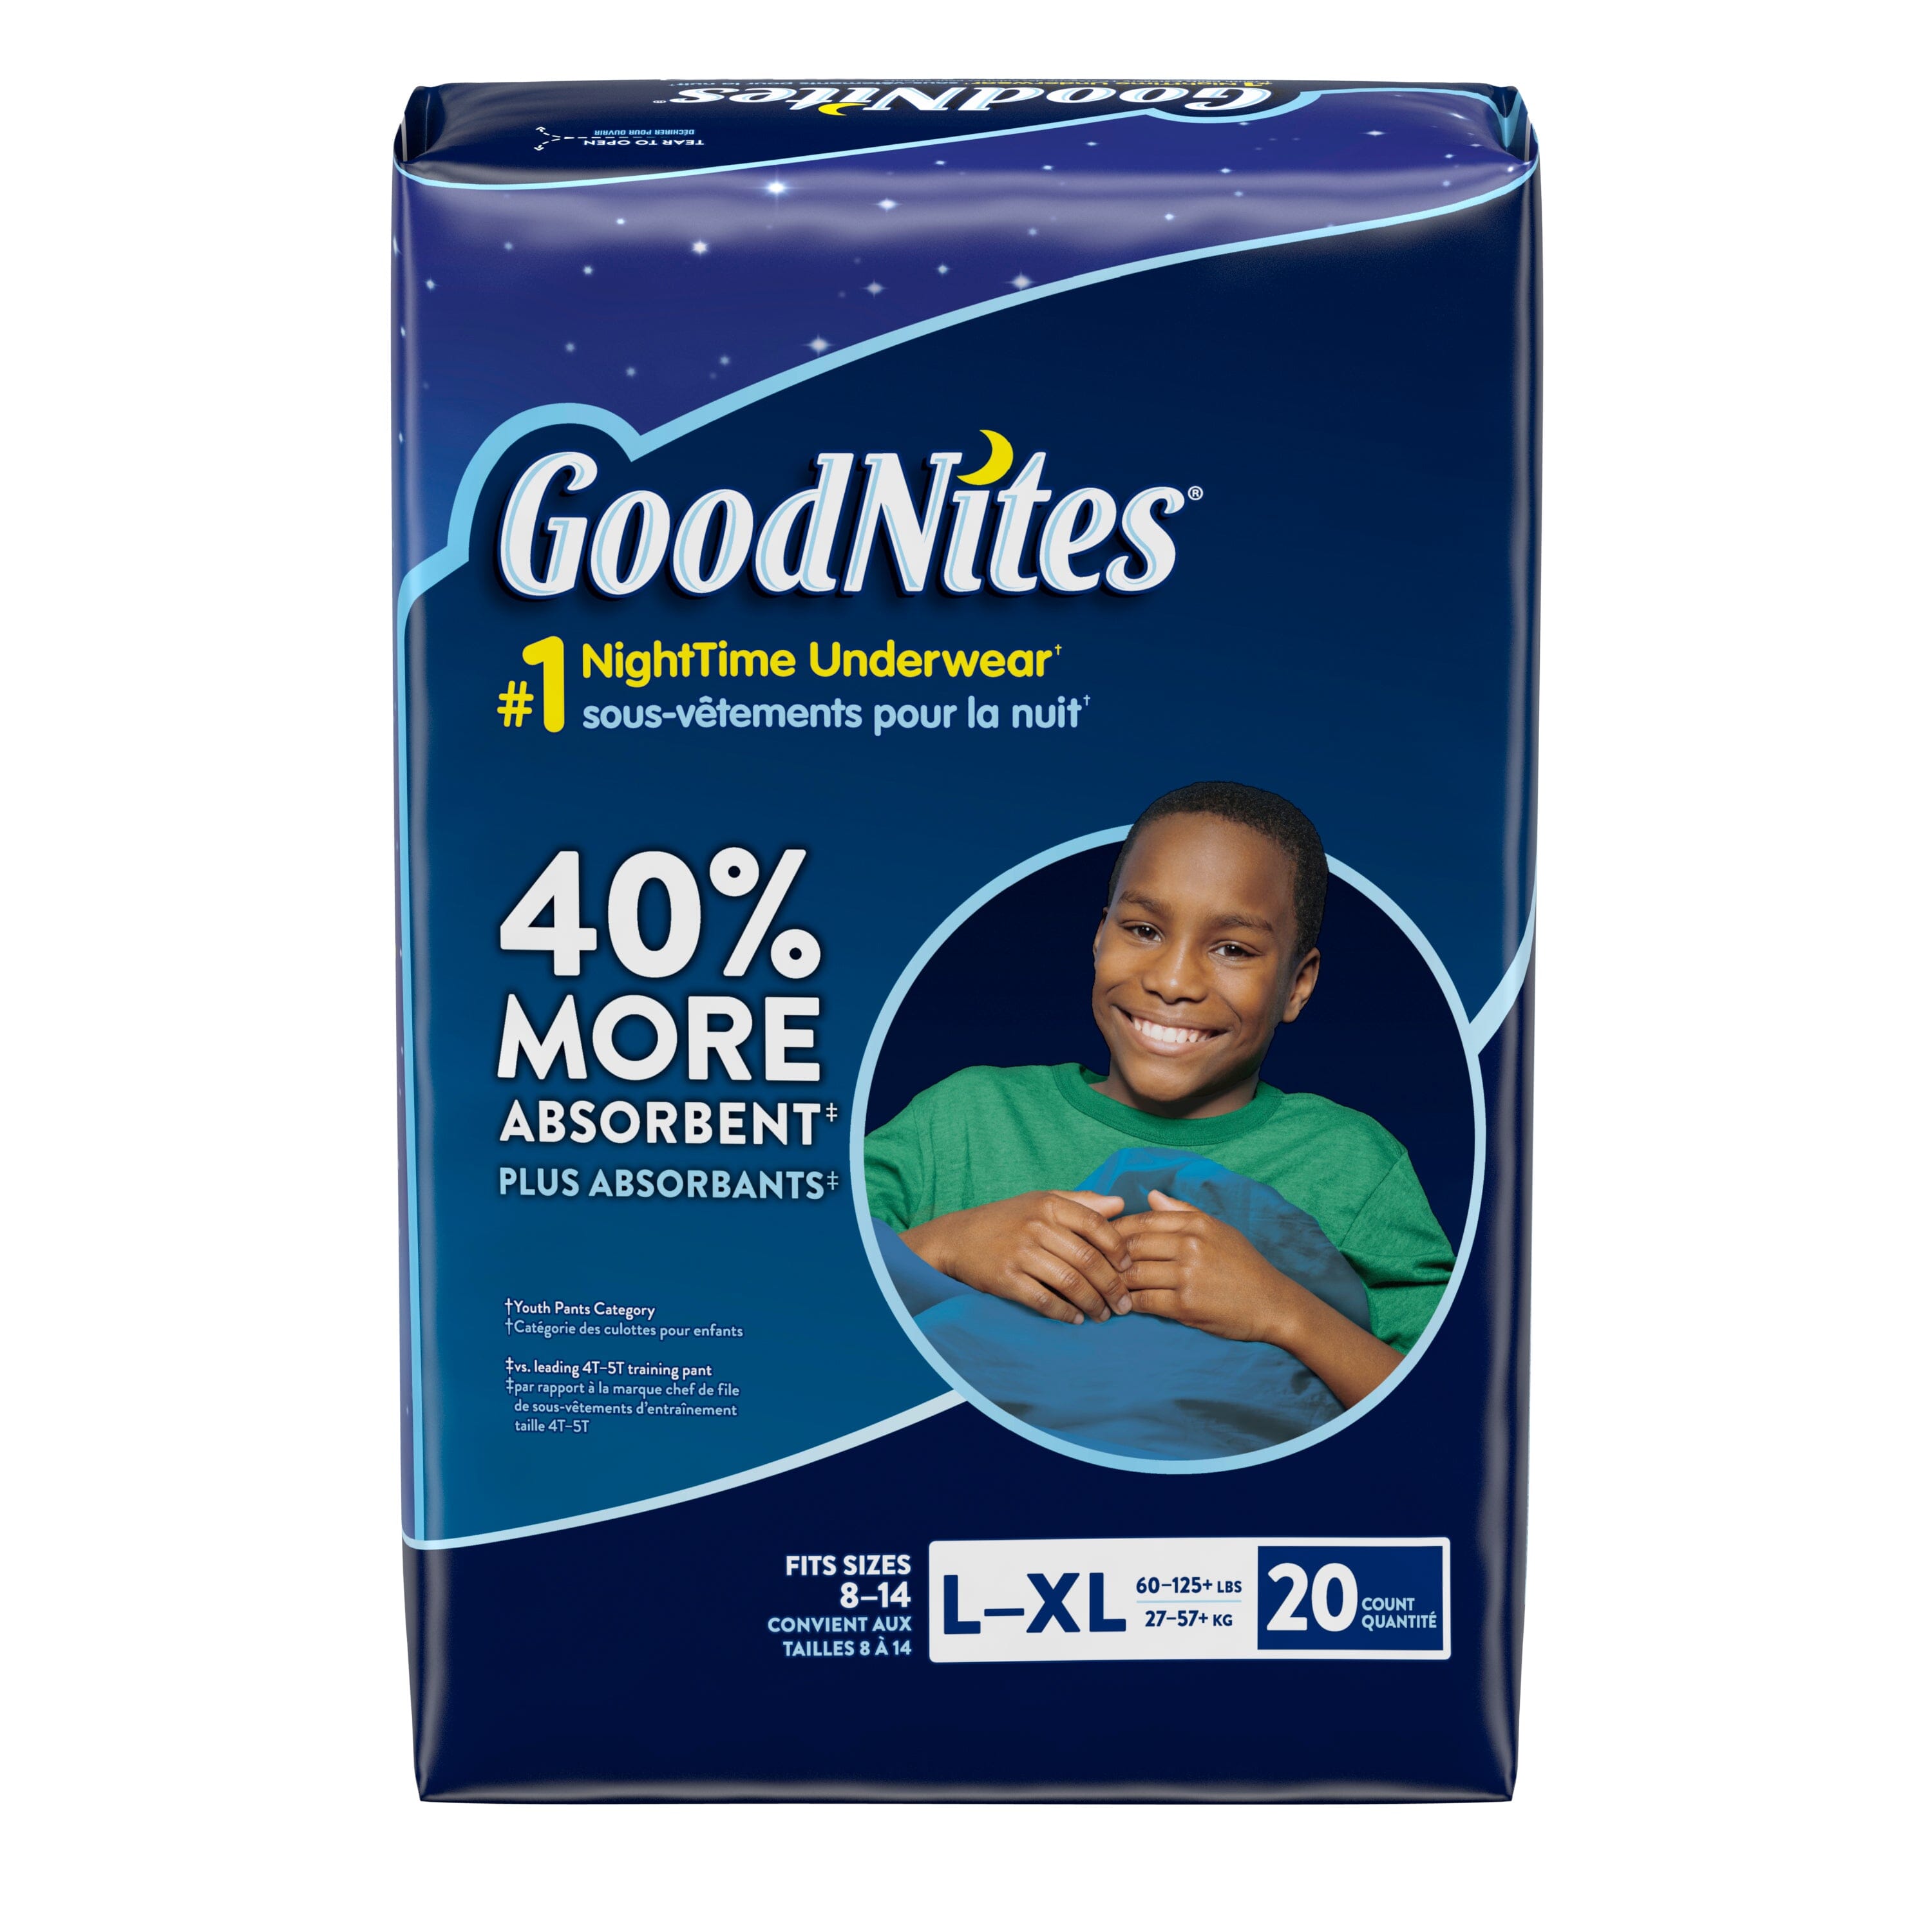 GoodNites Bedtime Underwear, Size 4-8/S-M (38-65 lb), Disney